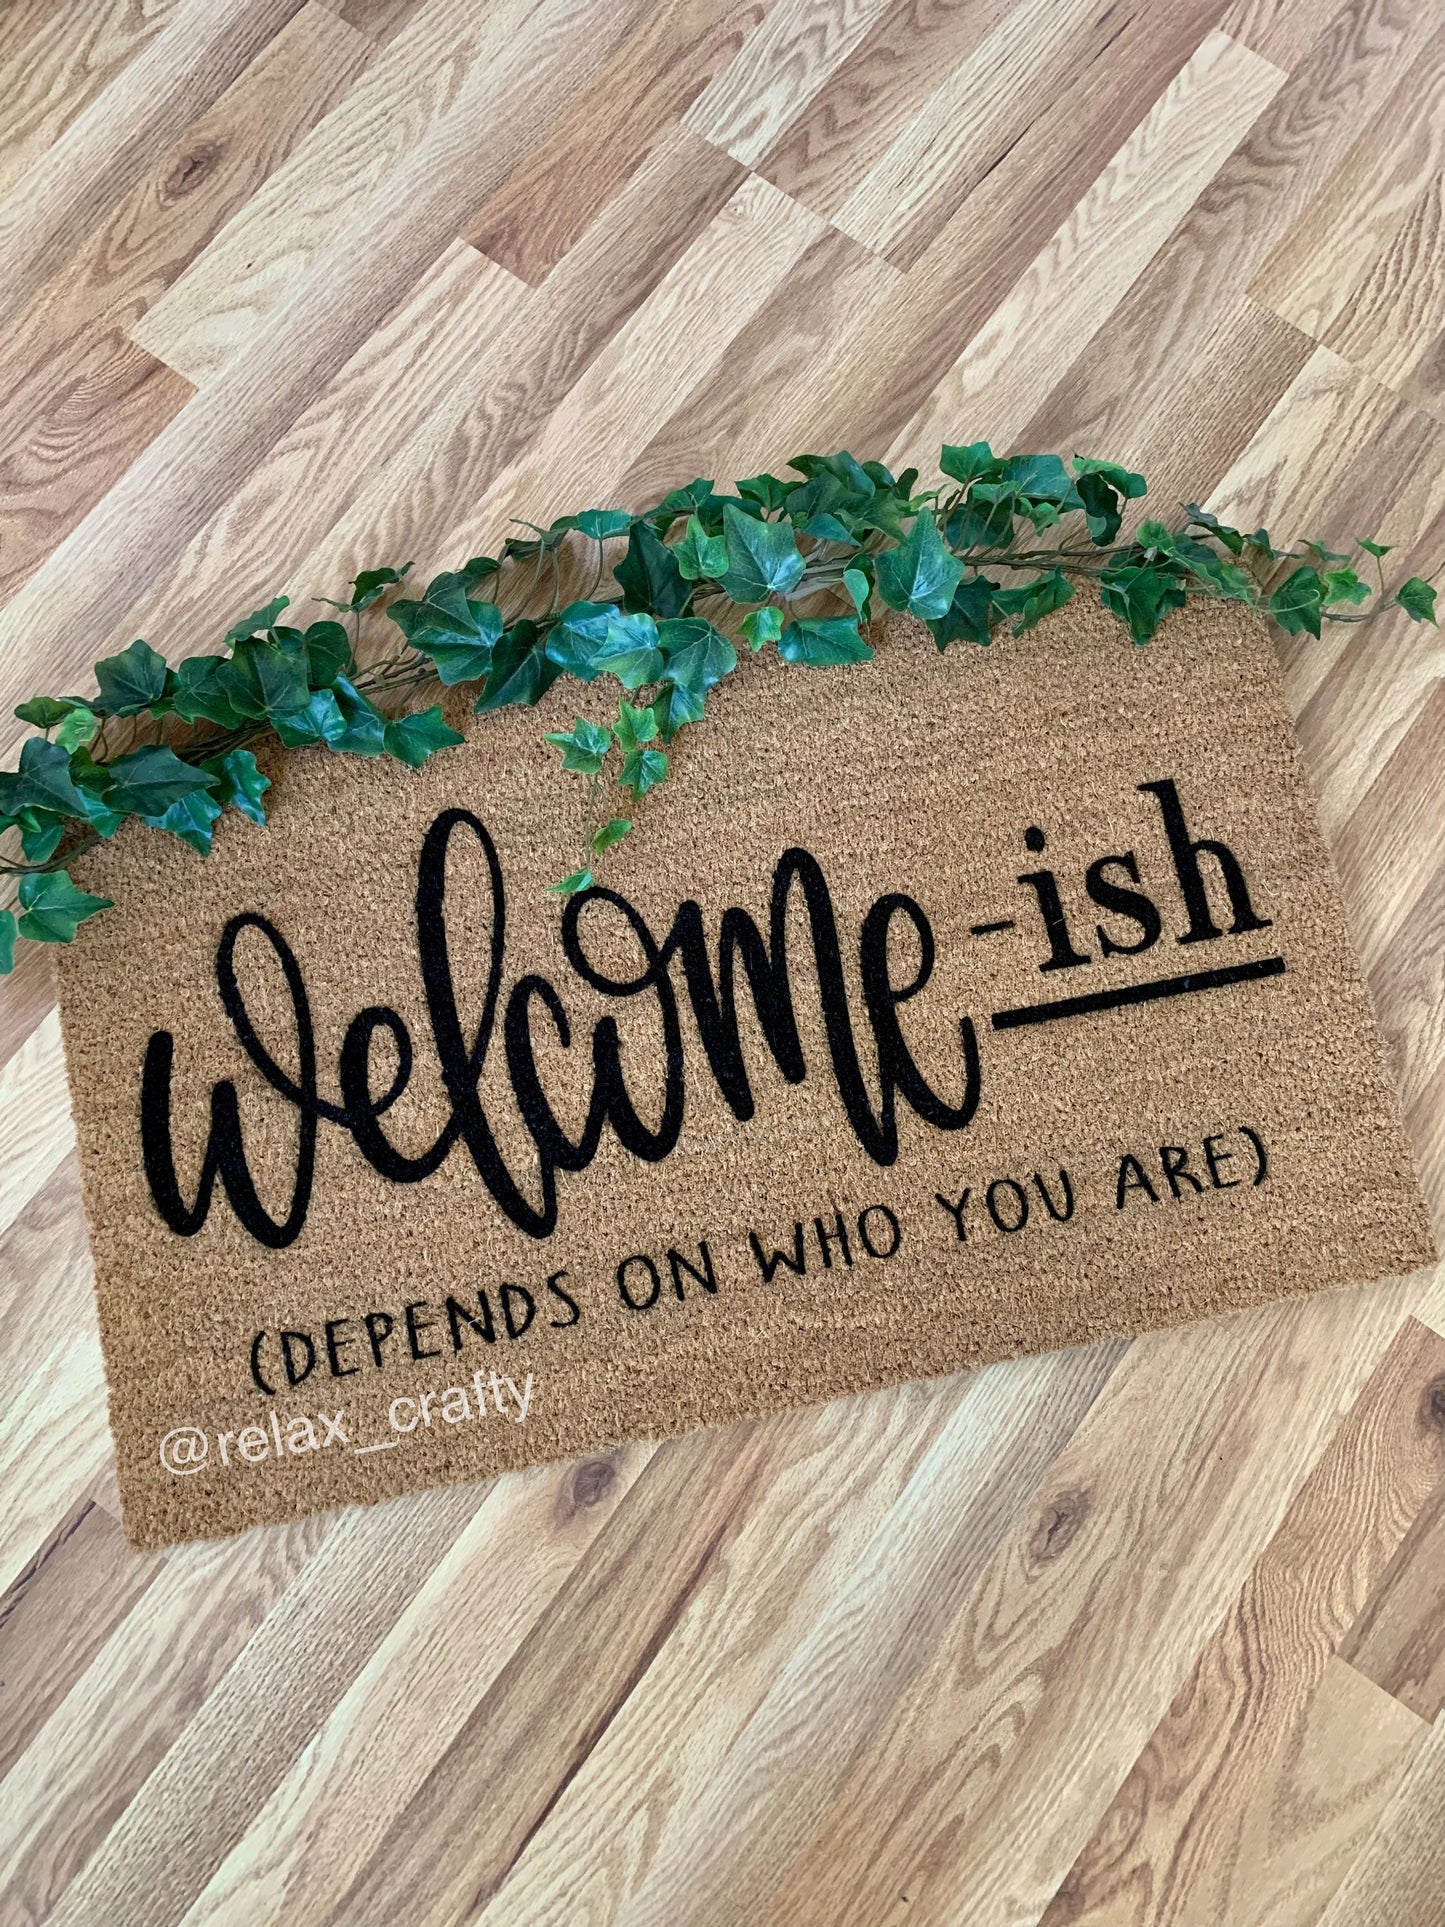 Welcome-ish Depends Who You Are Doormat | Funny Doormat